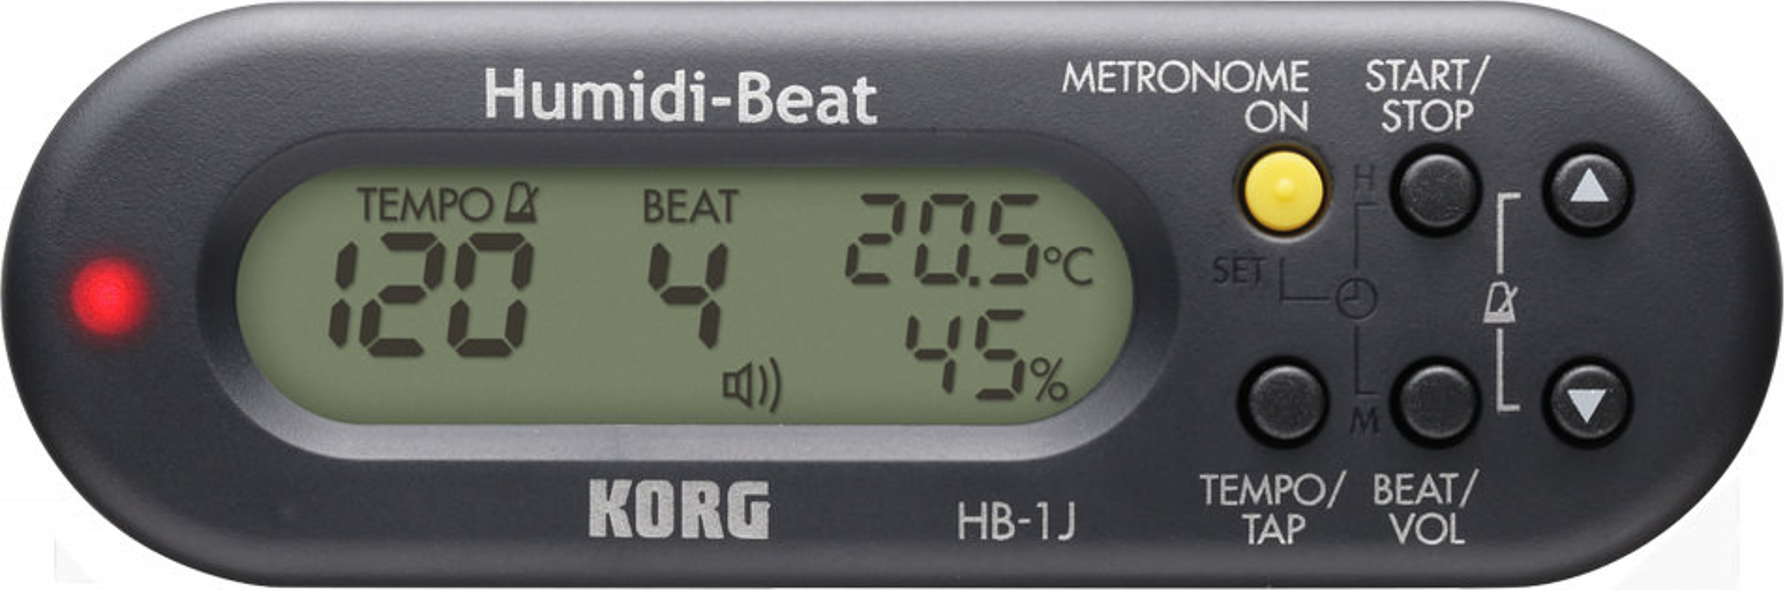 Korg Humidi-beat Metronome With Humidity Temperature Detector Black - Gitaarstemmer - Main picture